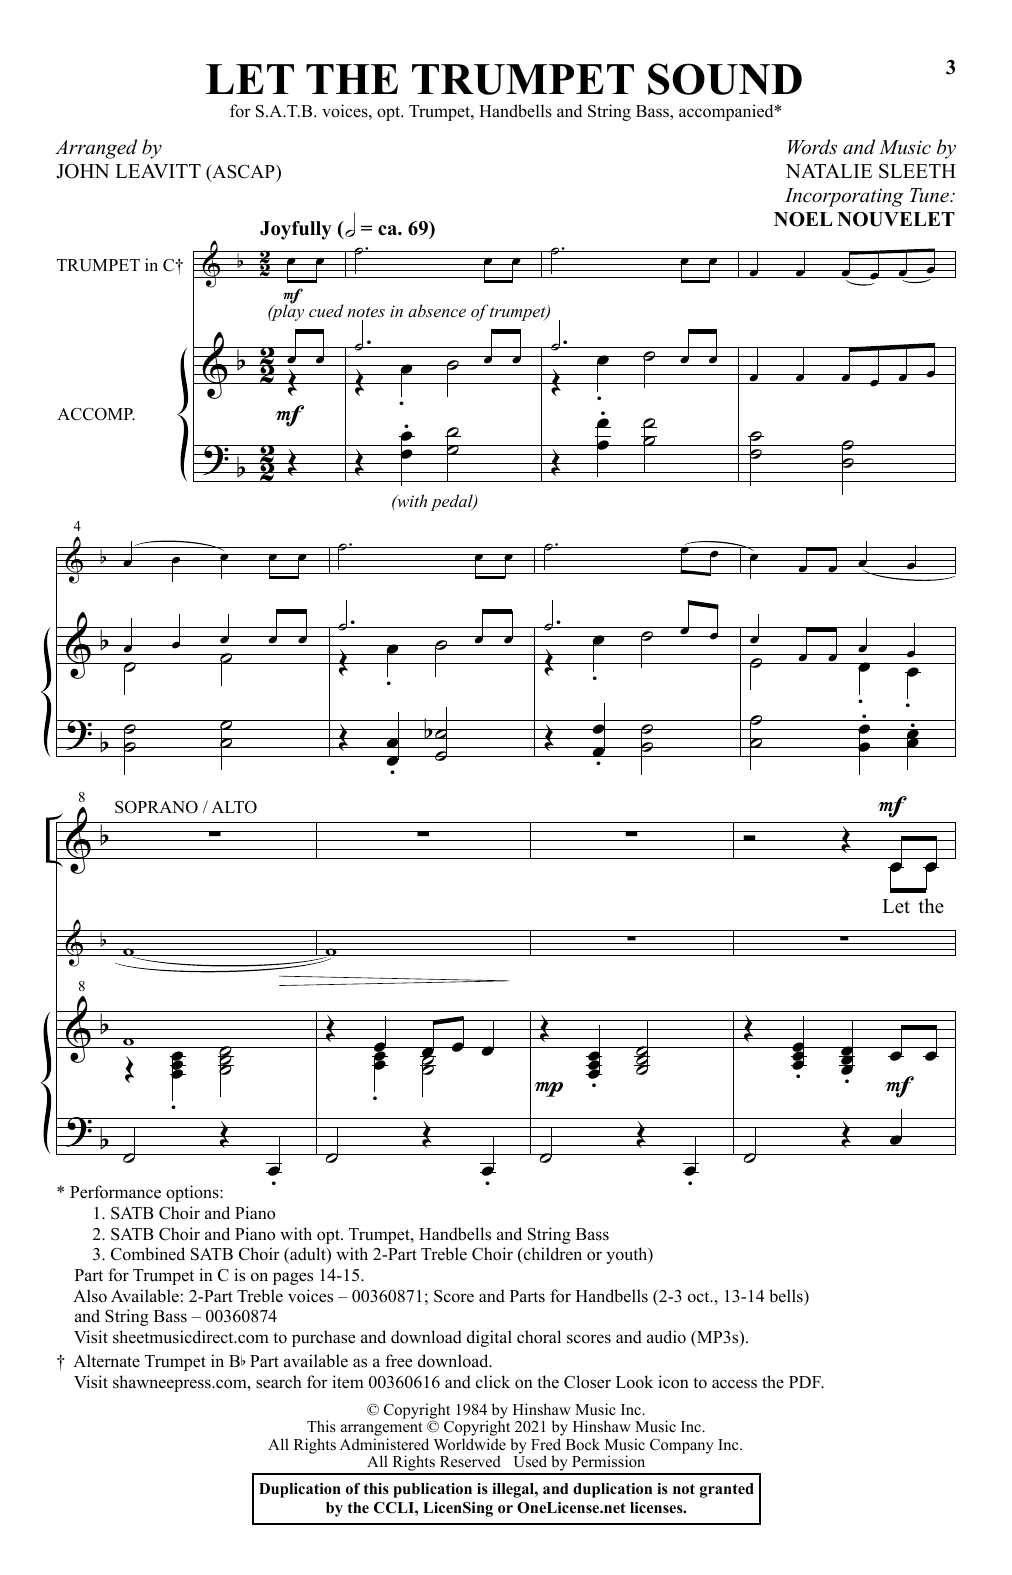 Natalie Sleeth Let The Trumpet Sound (arr. John Leavitt) Sheet Music Notes & Chords for SATB Choir - Download or Print PDF